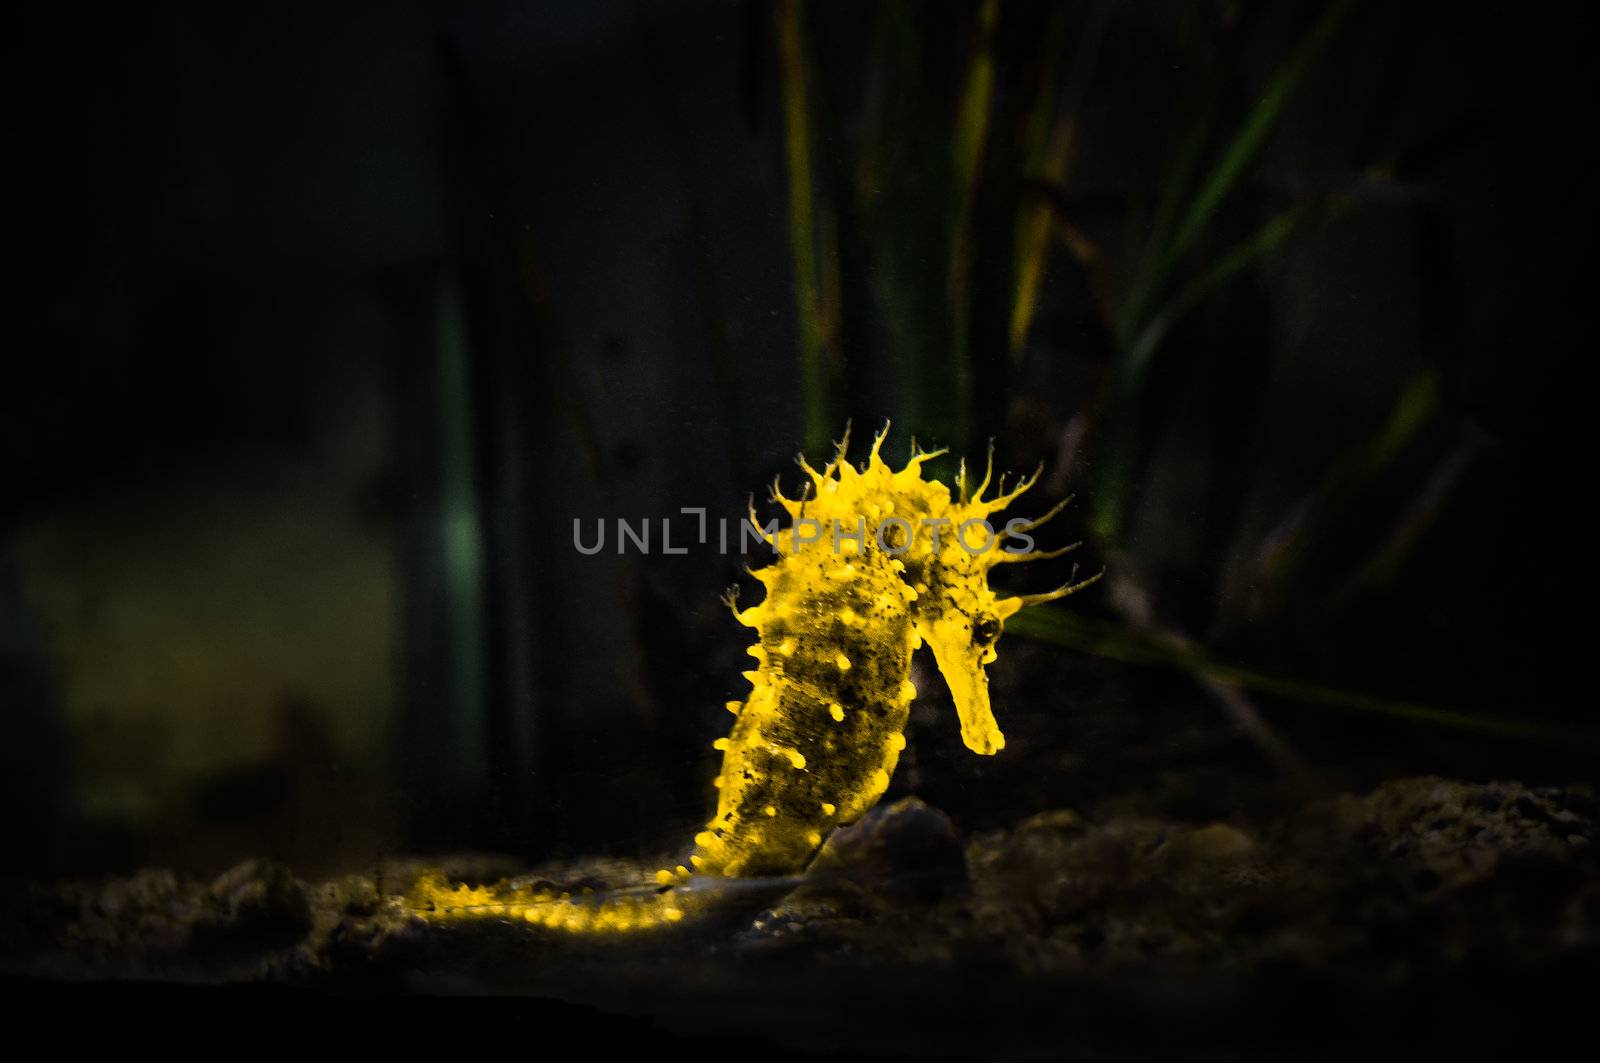 yellow glowing seahorse (Hippocampus) swimming on black. by weltreisendertj